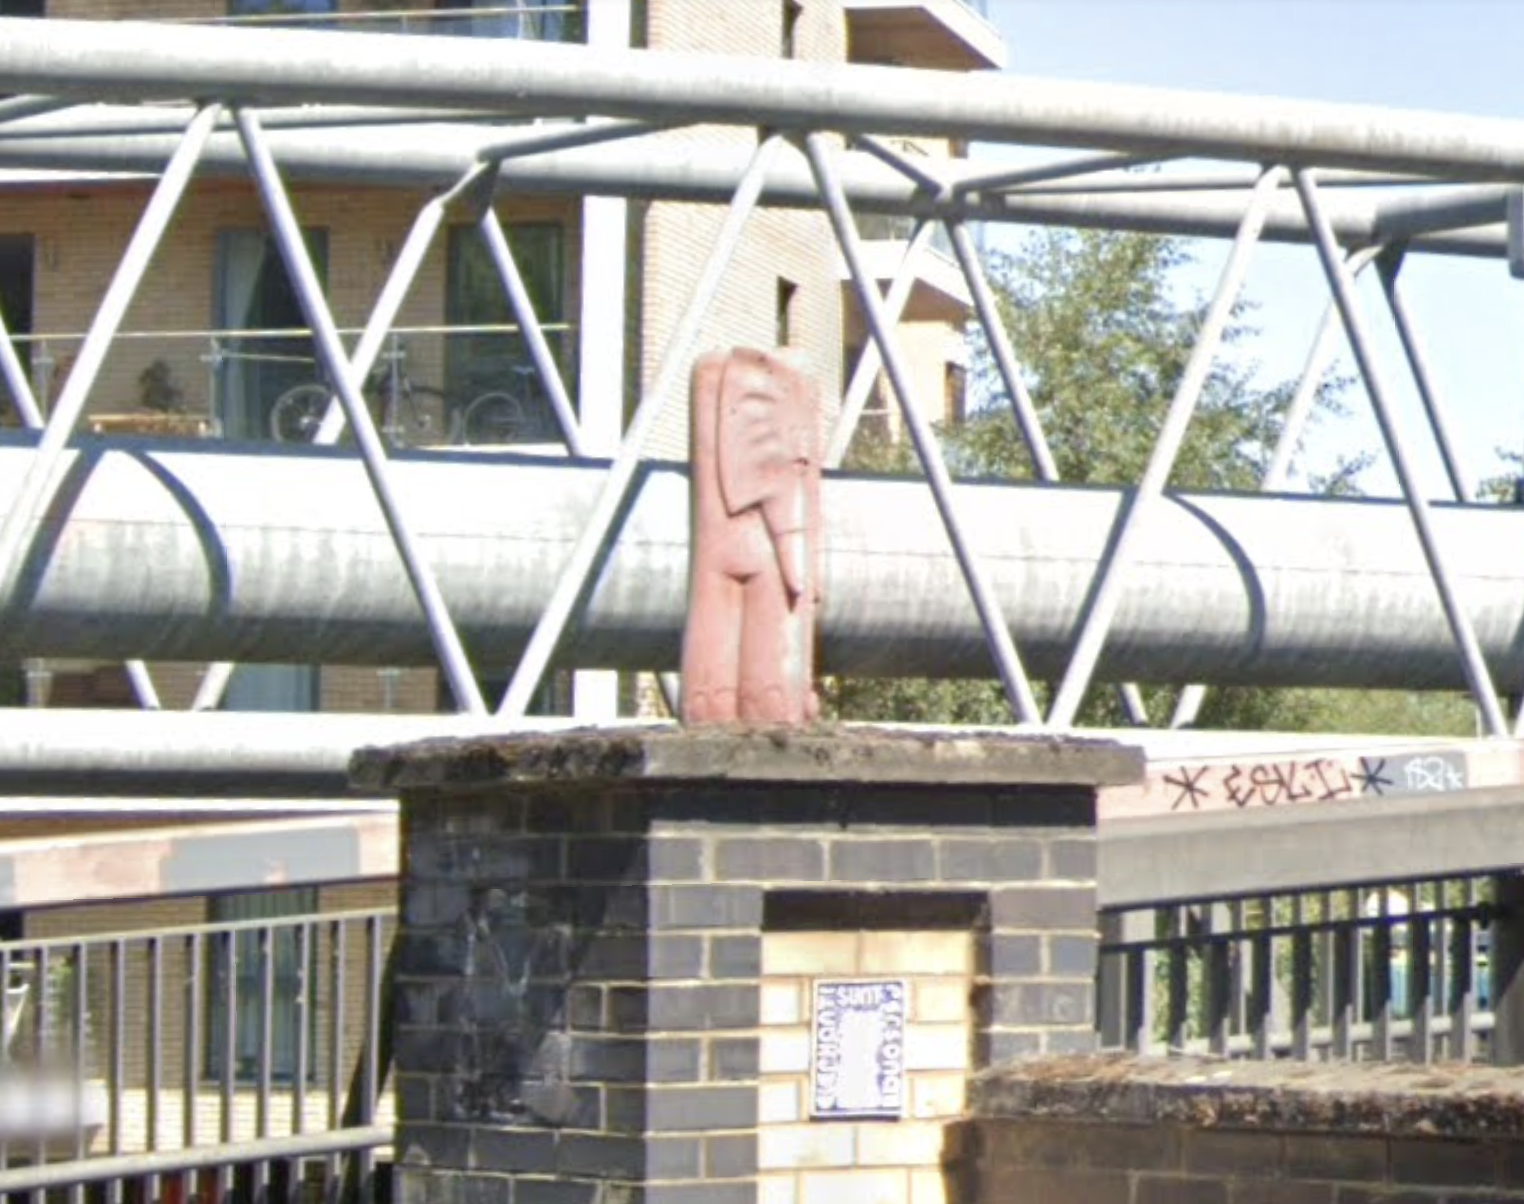 An elephant statue on Lea Bridge Road